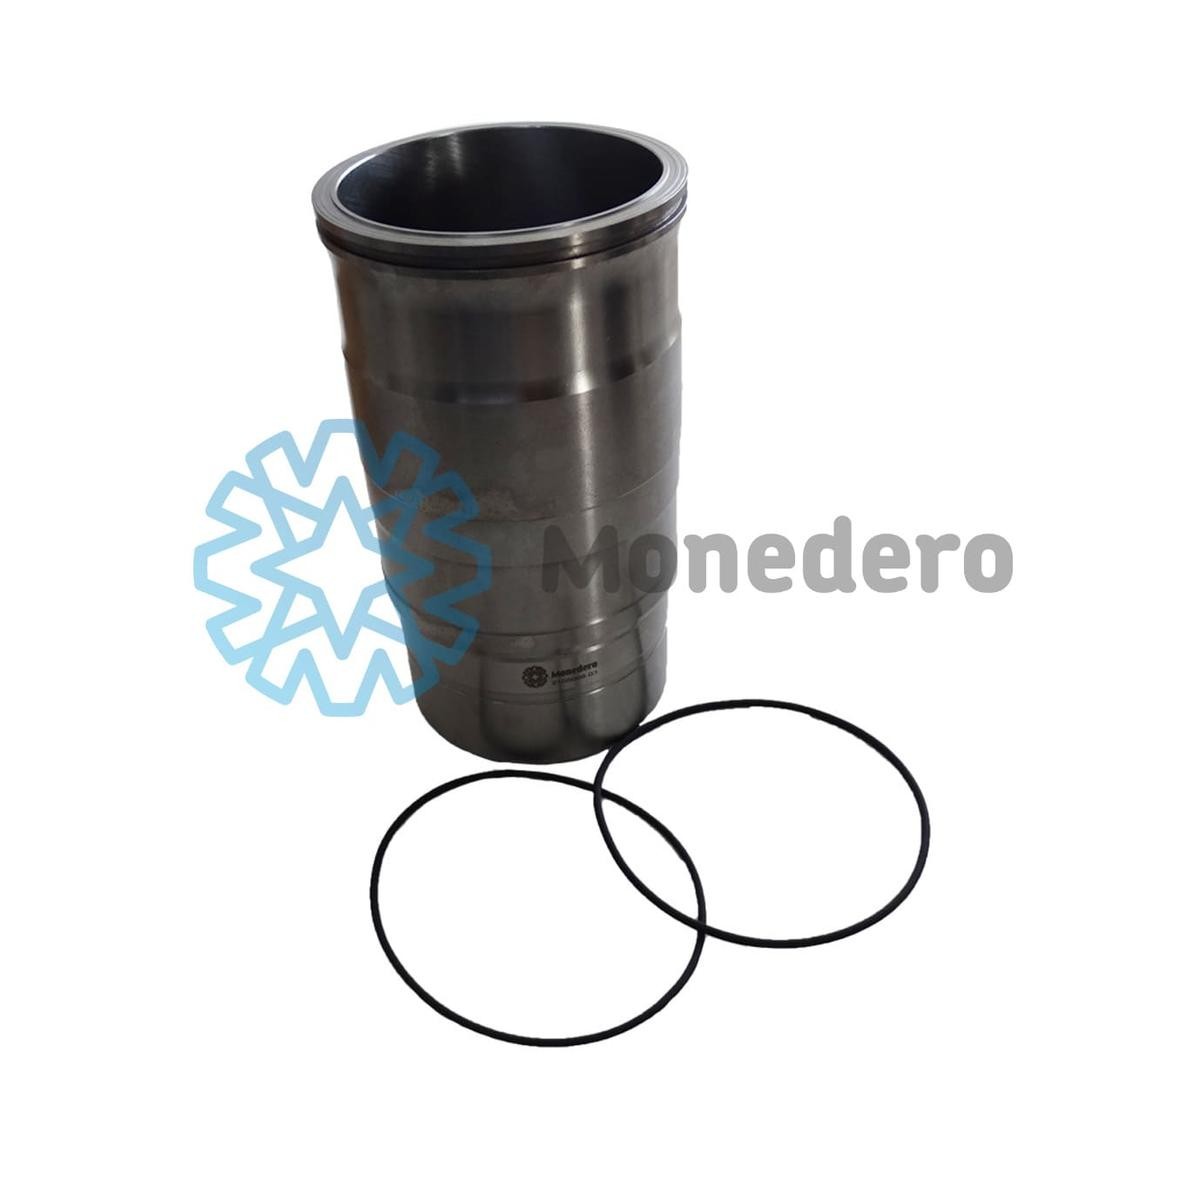 MONEDERO 40011300004 Cylinder Sleeve 1917106